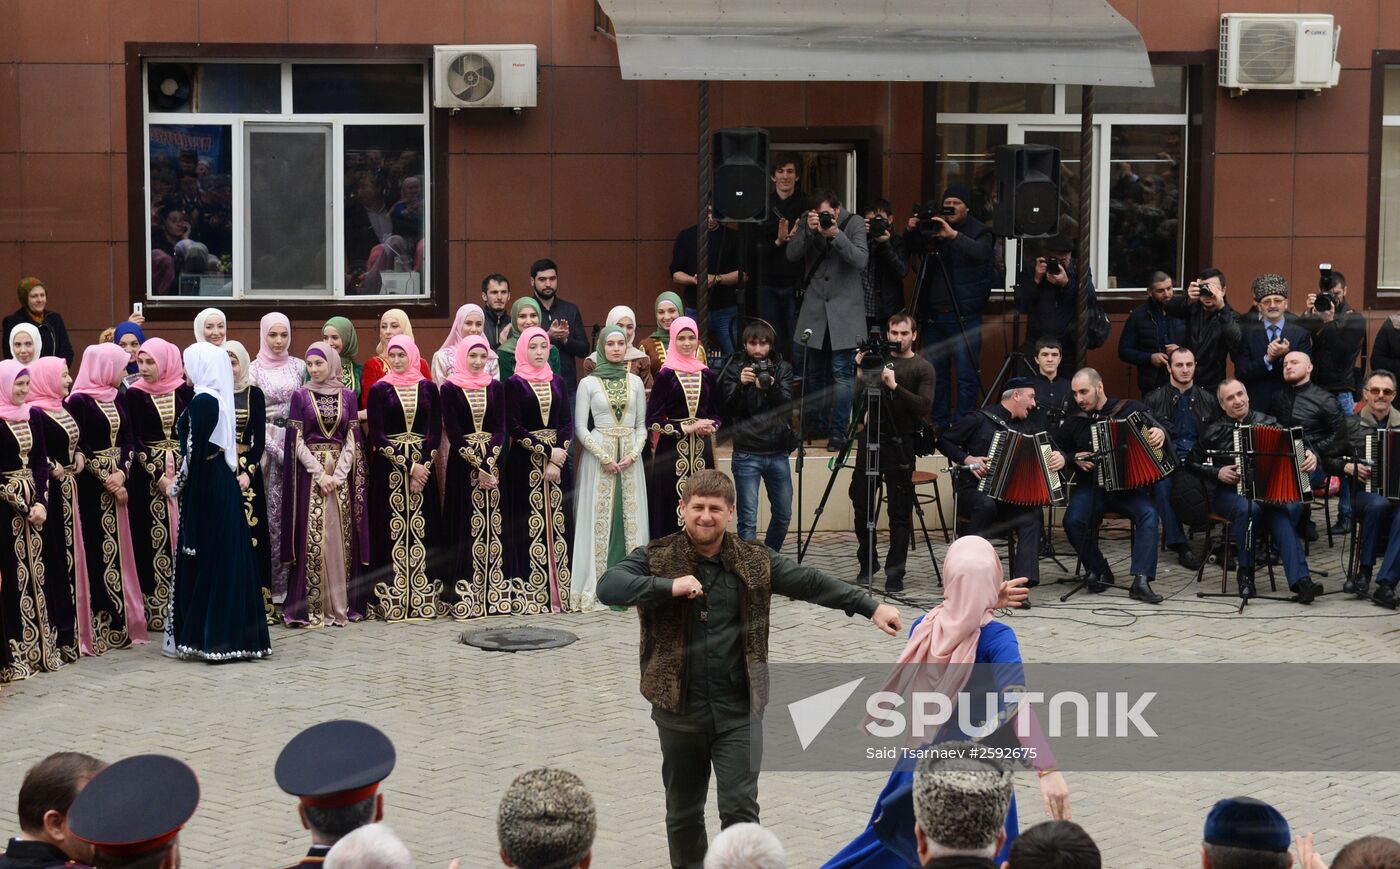 Grozny celebrates Chechen Constitution Day